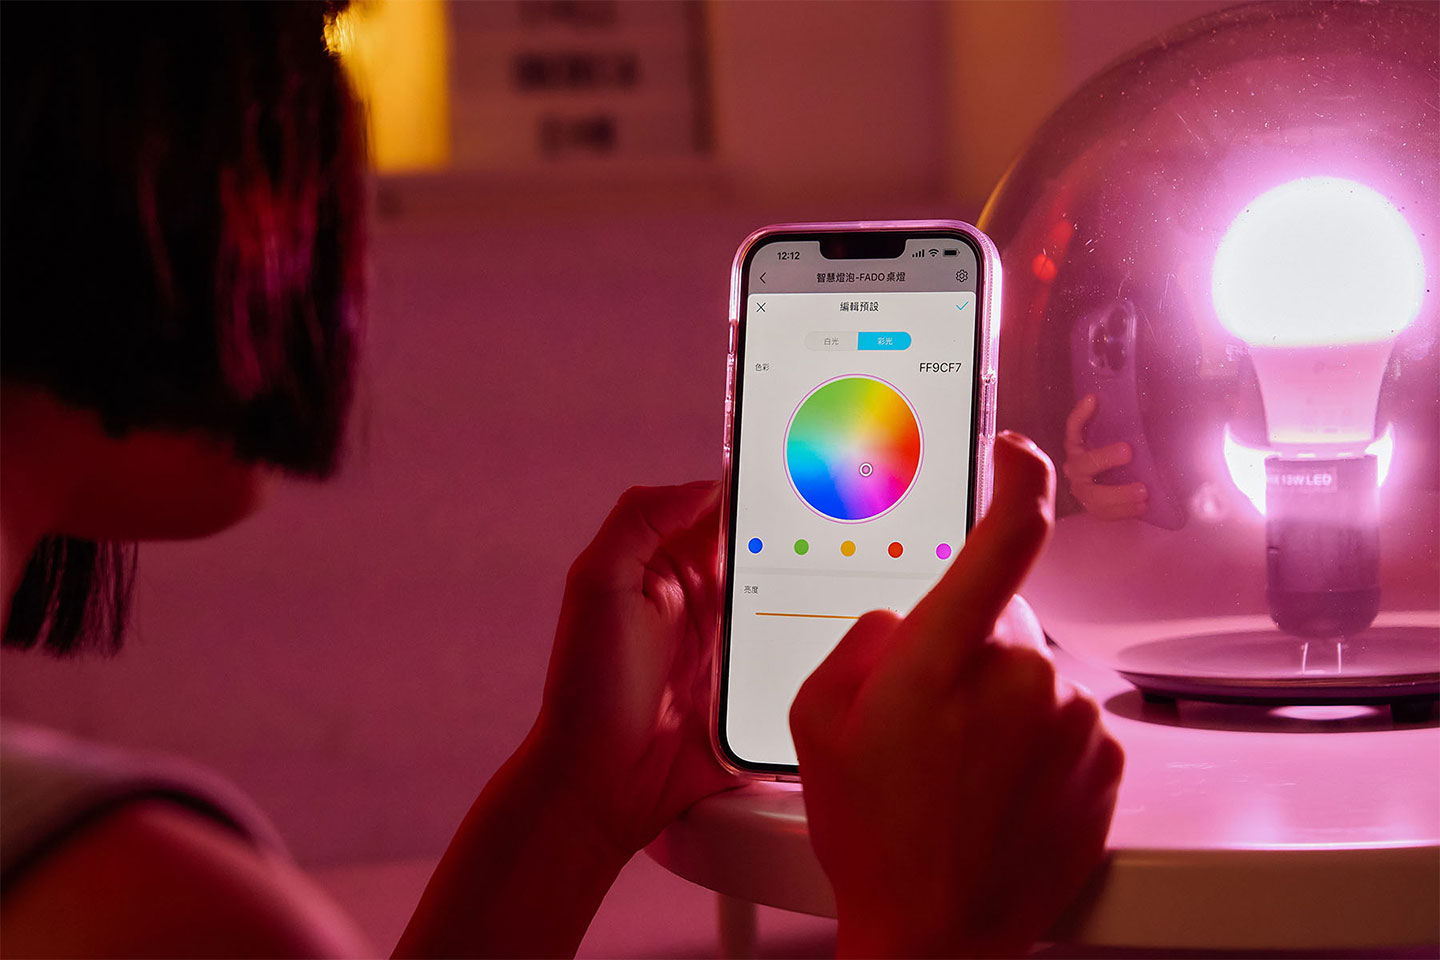 Tapo L530E 智慧燈泡可支援 1600 萬色顯示，對於色彩呈現有要求的人也能手動完成調校。